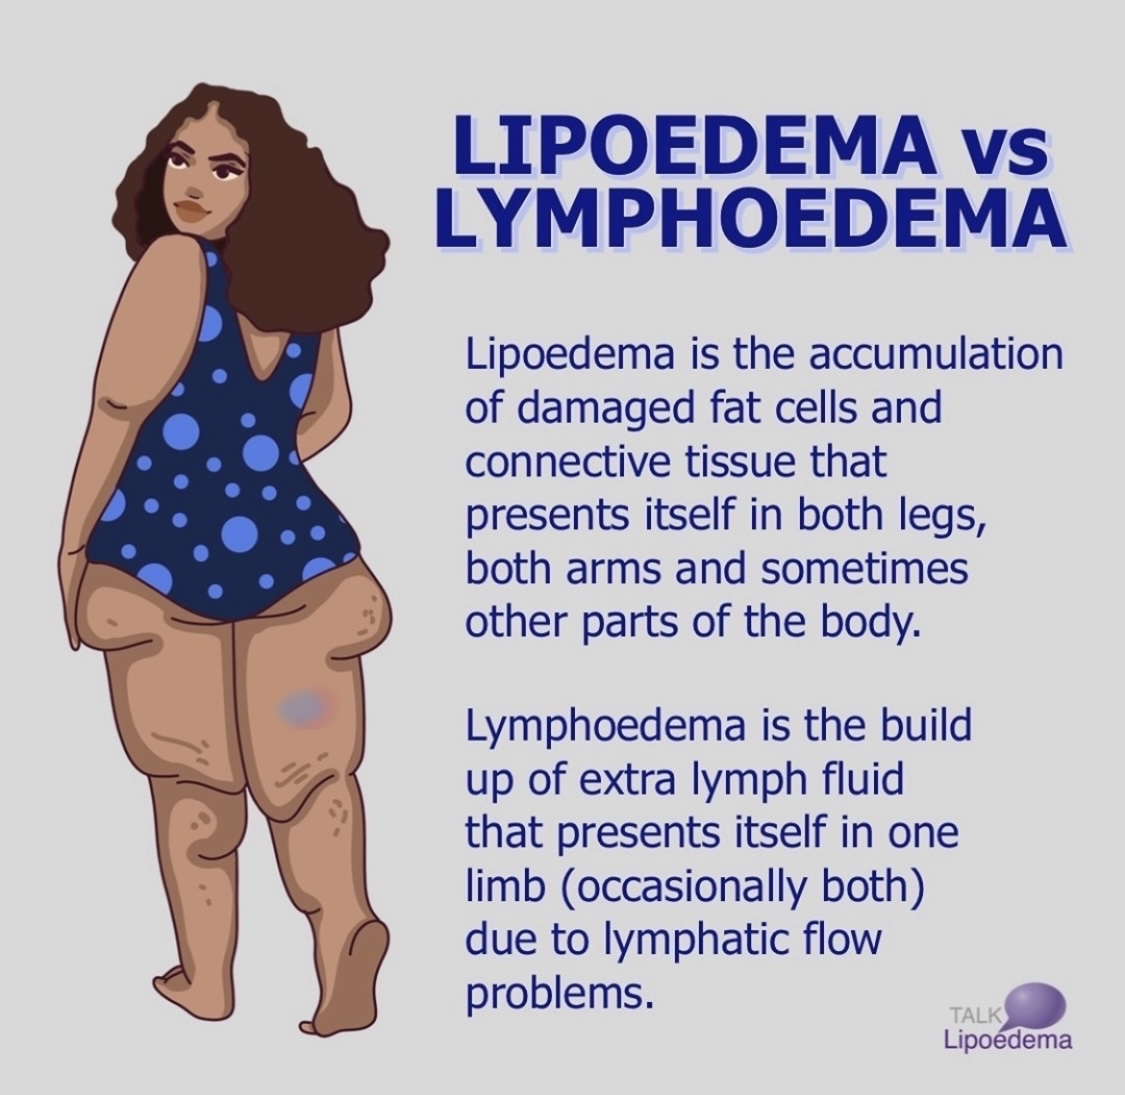 TalkLipoedema on X: Later stage #Lipoedema patients can suffer